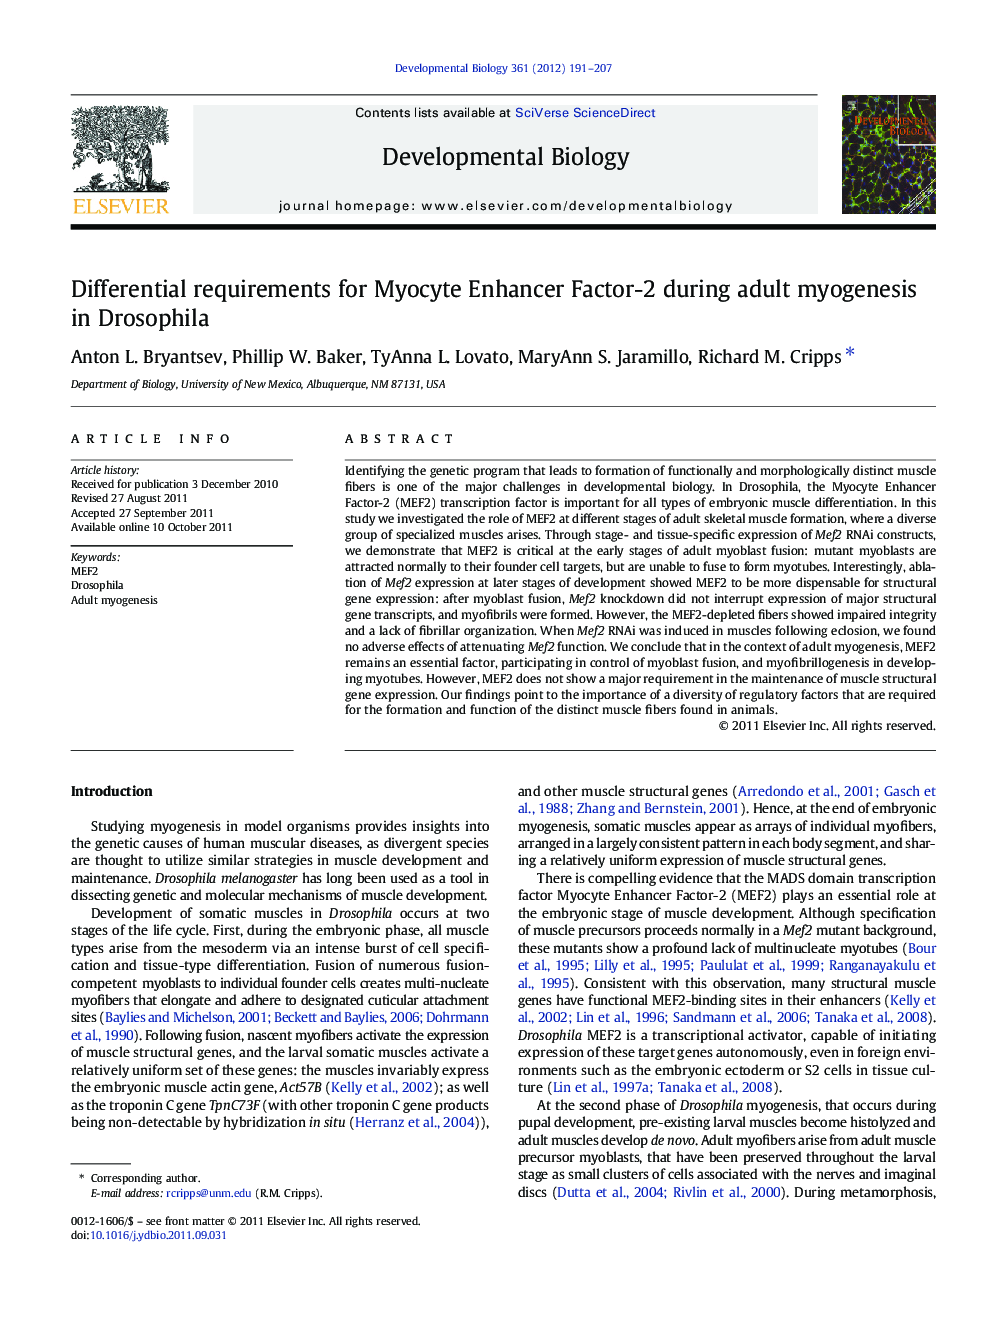 Differential requirements for Myocyte Enhancer Factor-2 during adult myogenesis in Drosophila